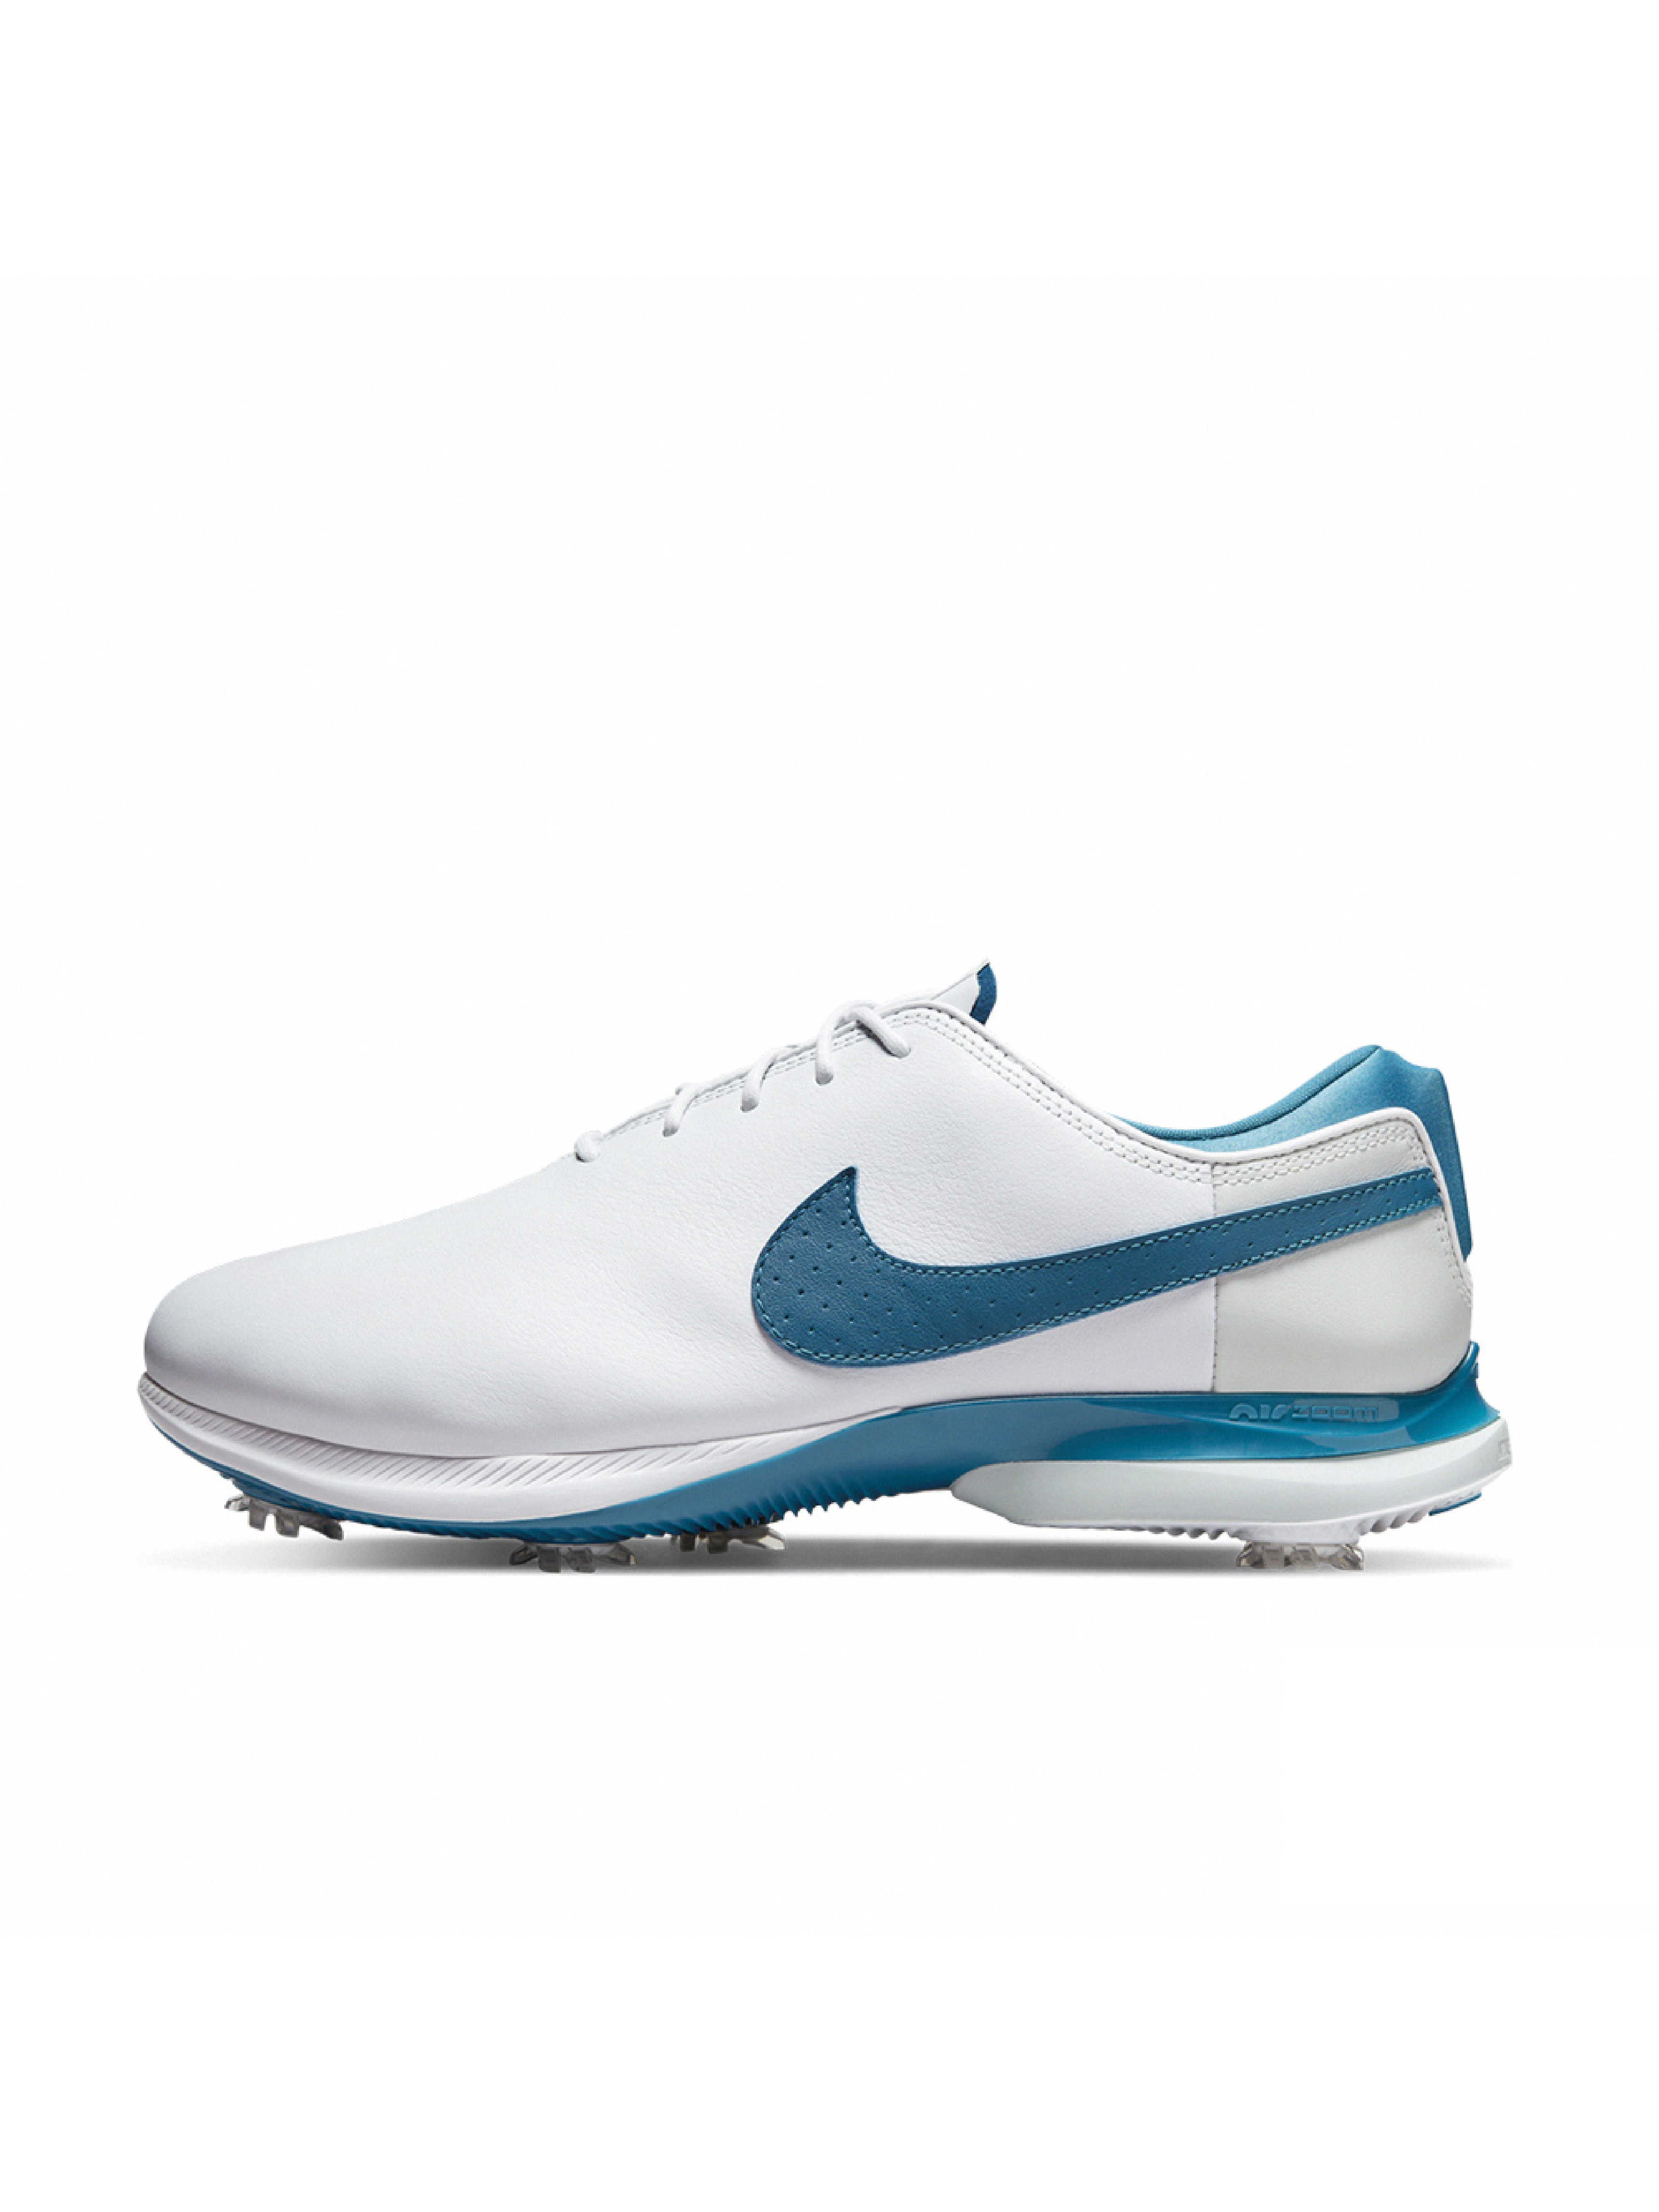 Nike【打早球不怕】Air Zoom Victory Tour 2 高爾夫球鞋(寬/有釘) #DJ6570